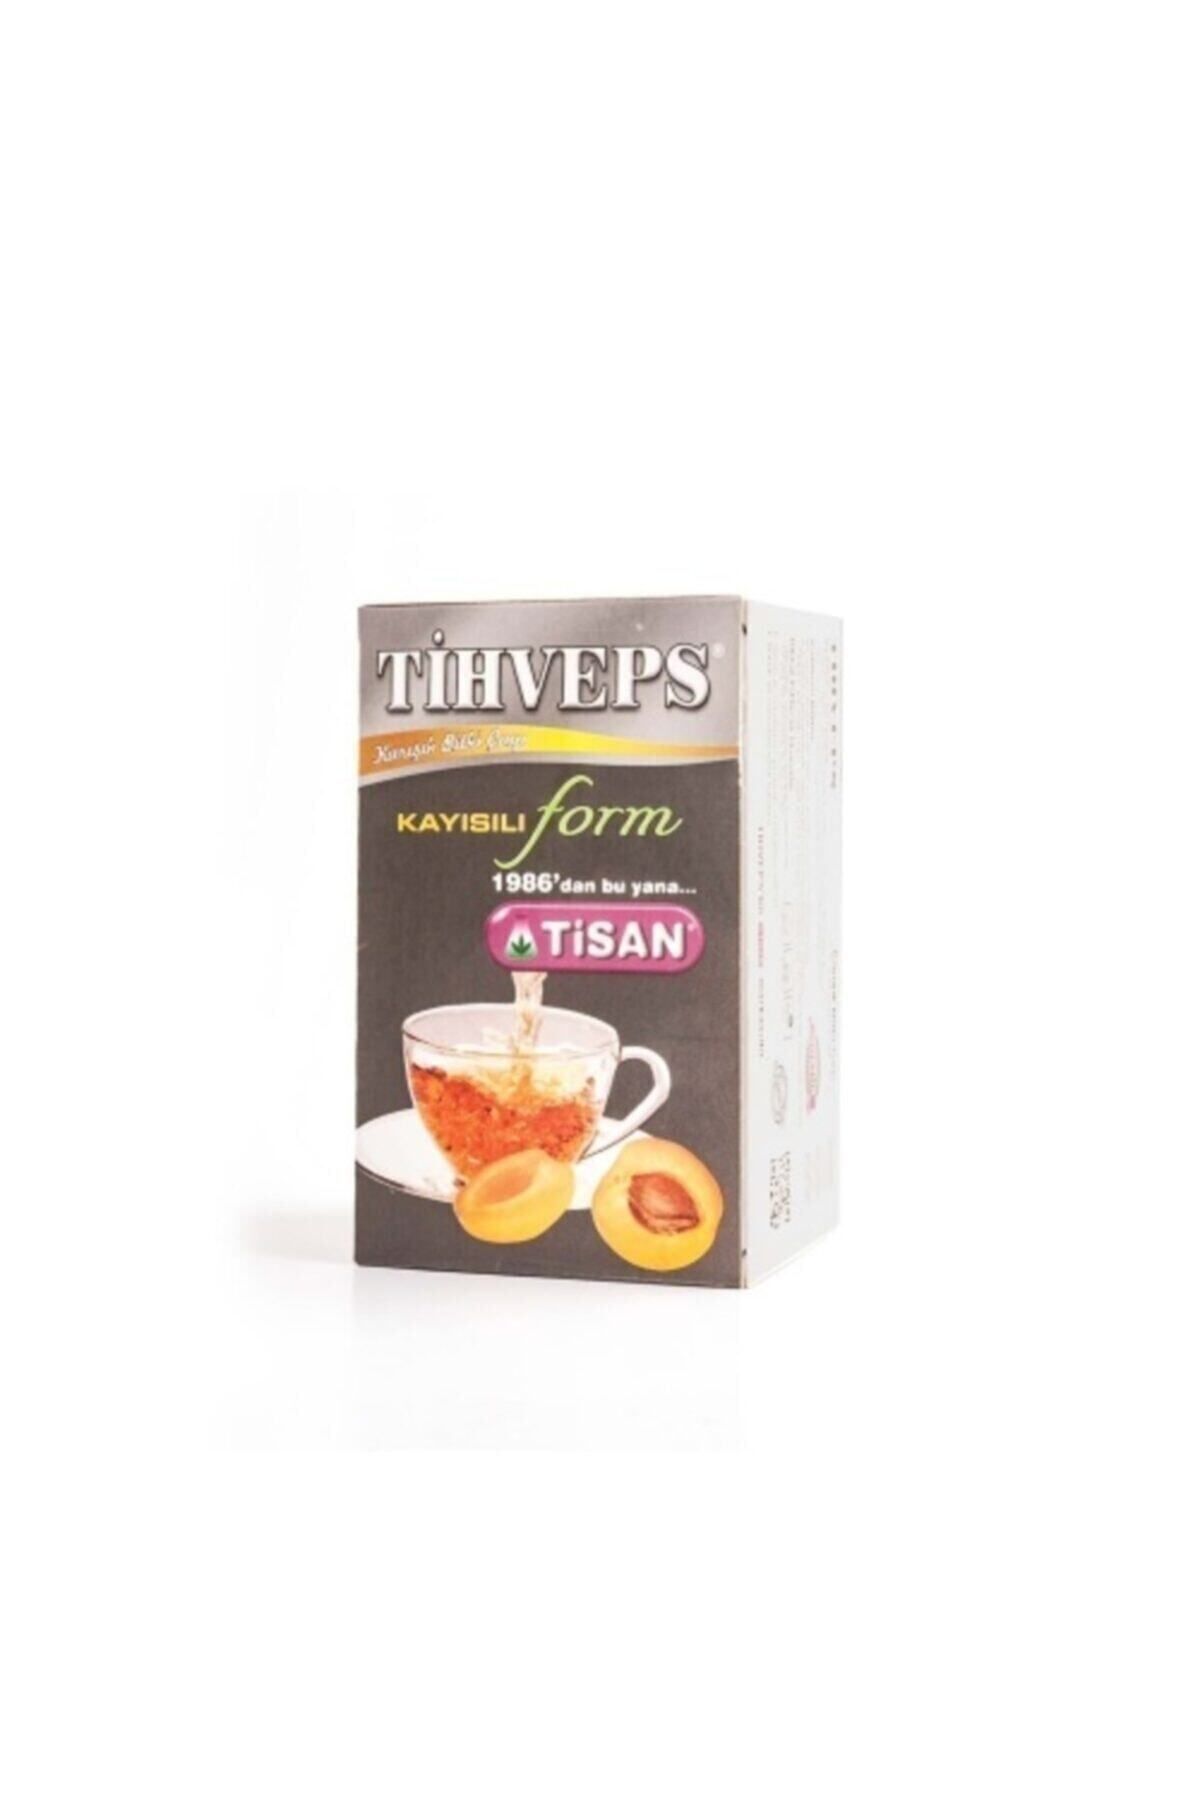 Tisan Tihveps Kayısılı Form Çay Tiveps Form Detoks Detox Çayı Kayısı Sallama Çay